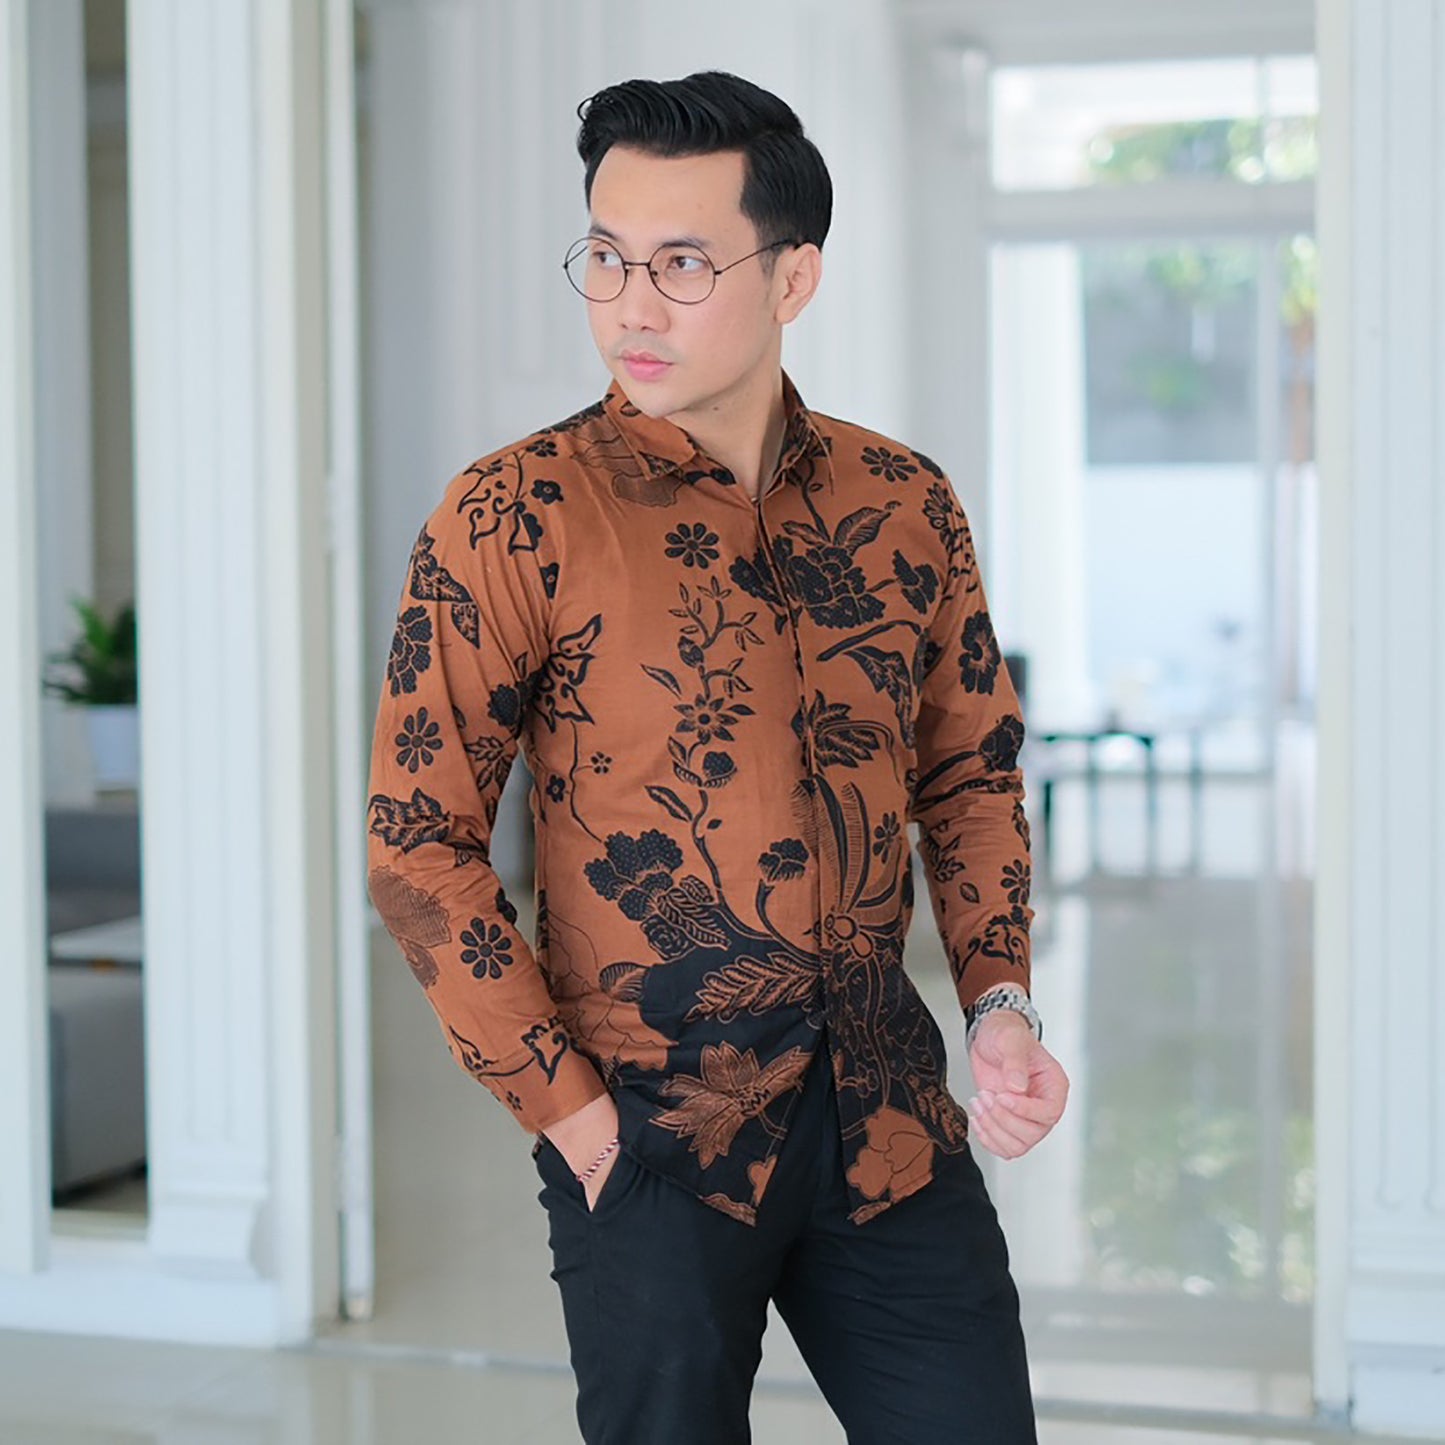 Floral Elegance Bianca's Long Sleeved Men's Batik Shirt in Sogan Flower Pattern, Men Batik, Men Batik Shirt, Men Shirt, Batik Shirts